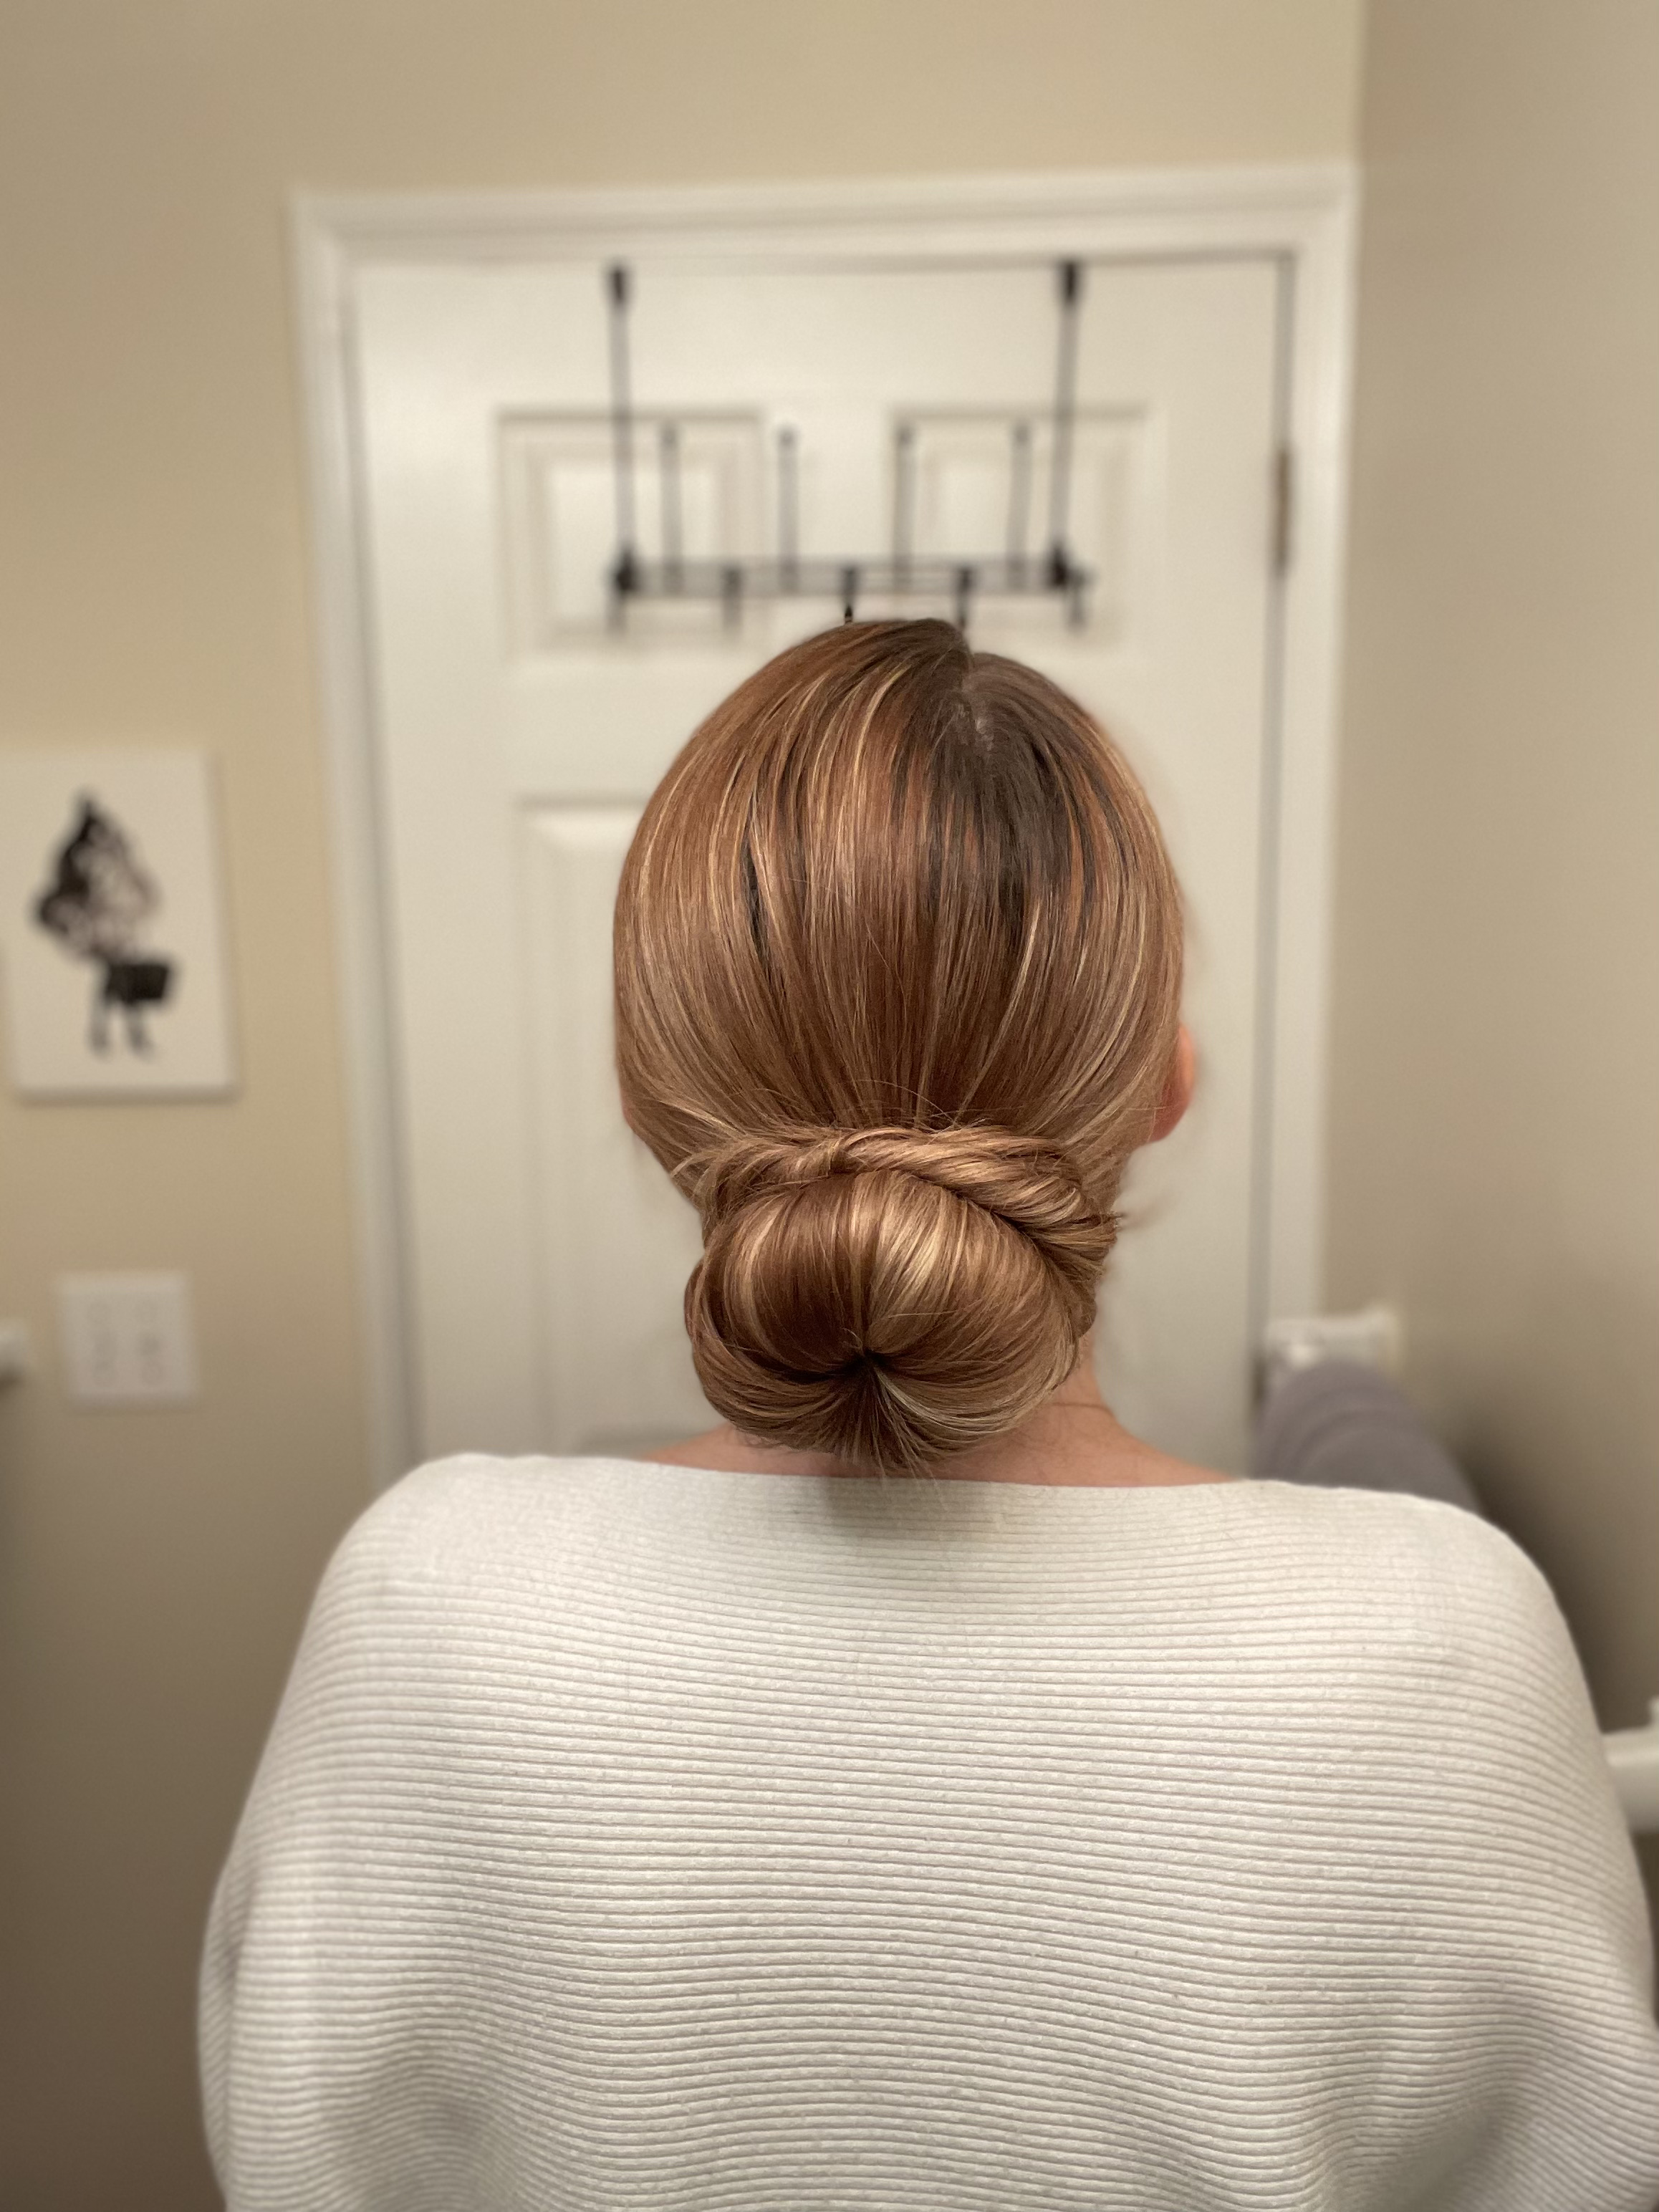 Simple bun hairstyle